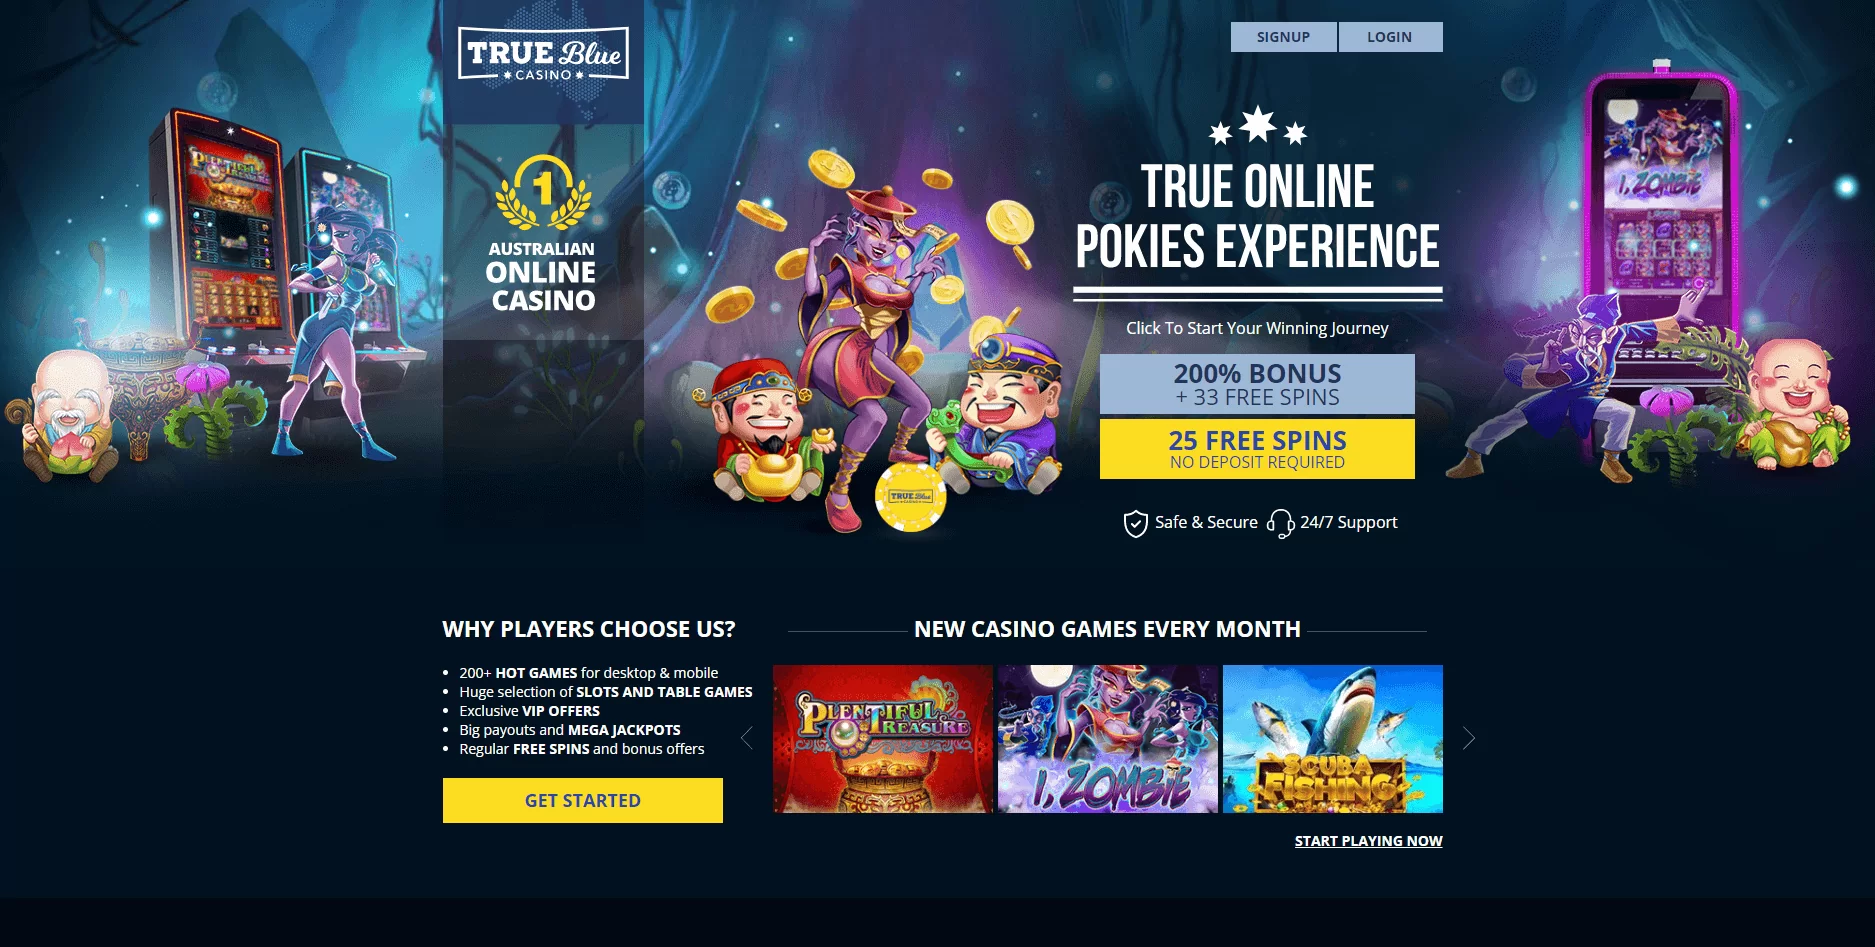 buzzluck online casino ndb january 17 2019